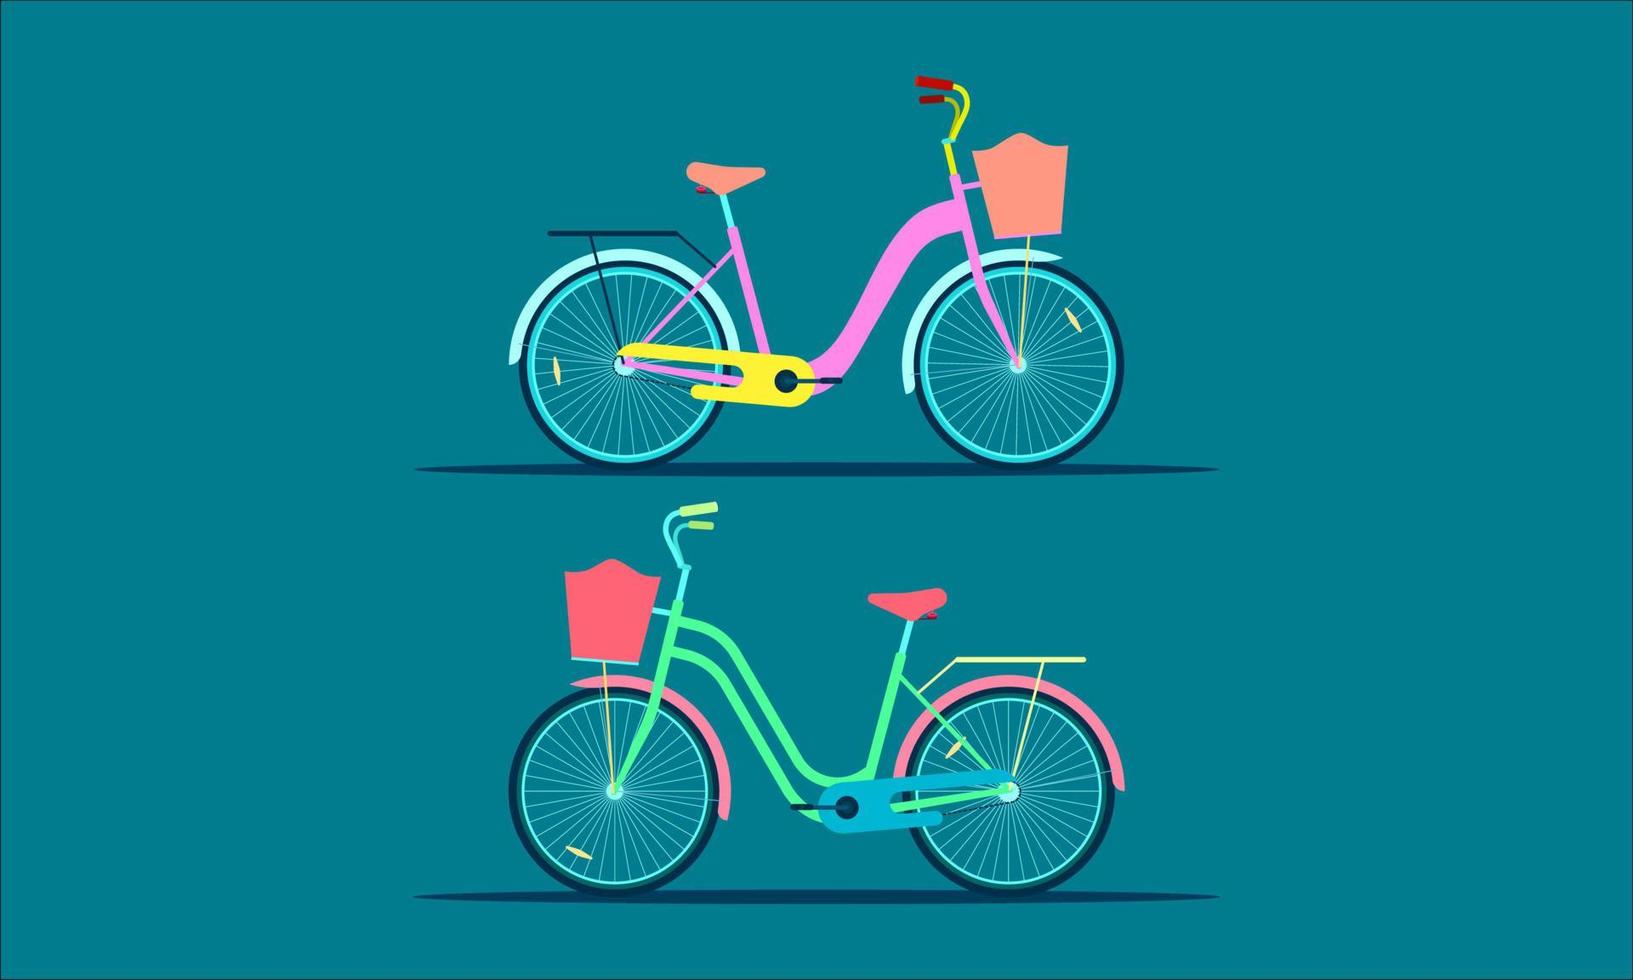 la bicicleta de dos casas. estilo moderno colorido plano. ilustración vectorial eps10 vector